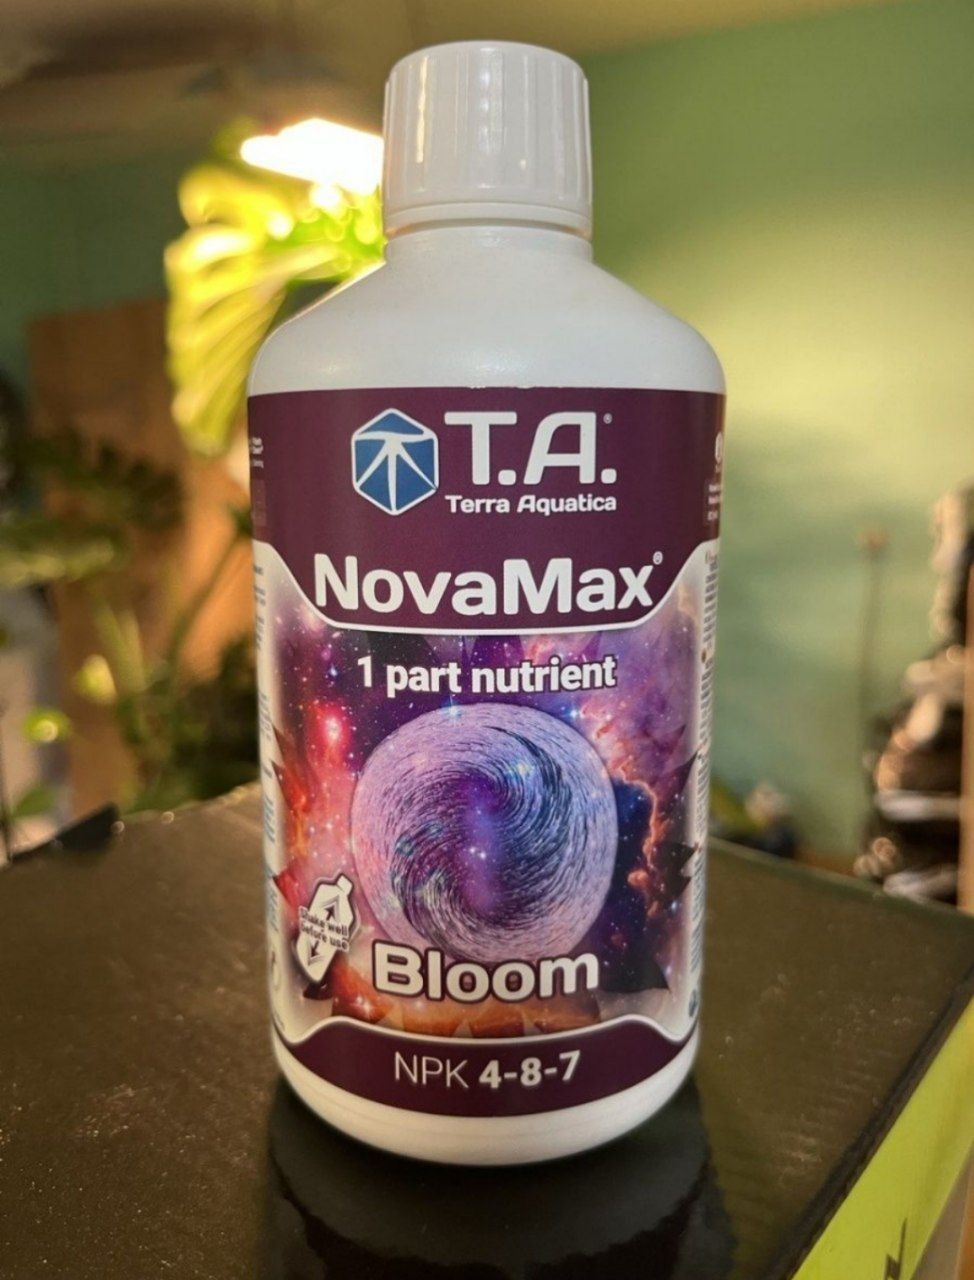 Комплект удобрений (GHE) (NovaMax Grow + NovaMax Bloom) 2шт по 500 мл.